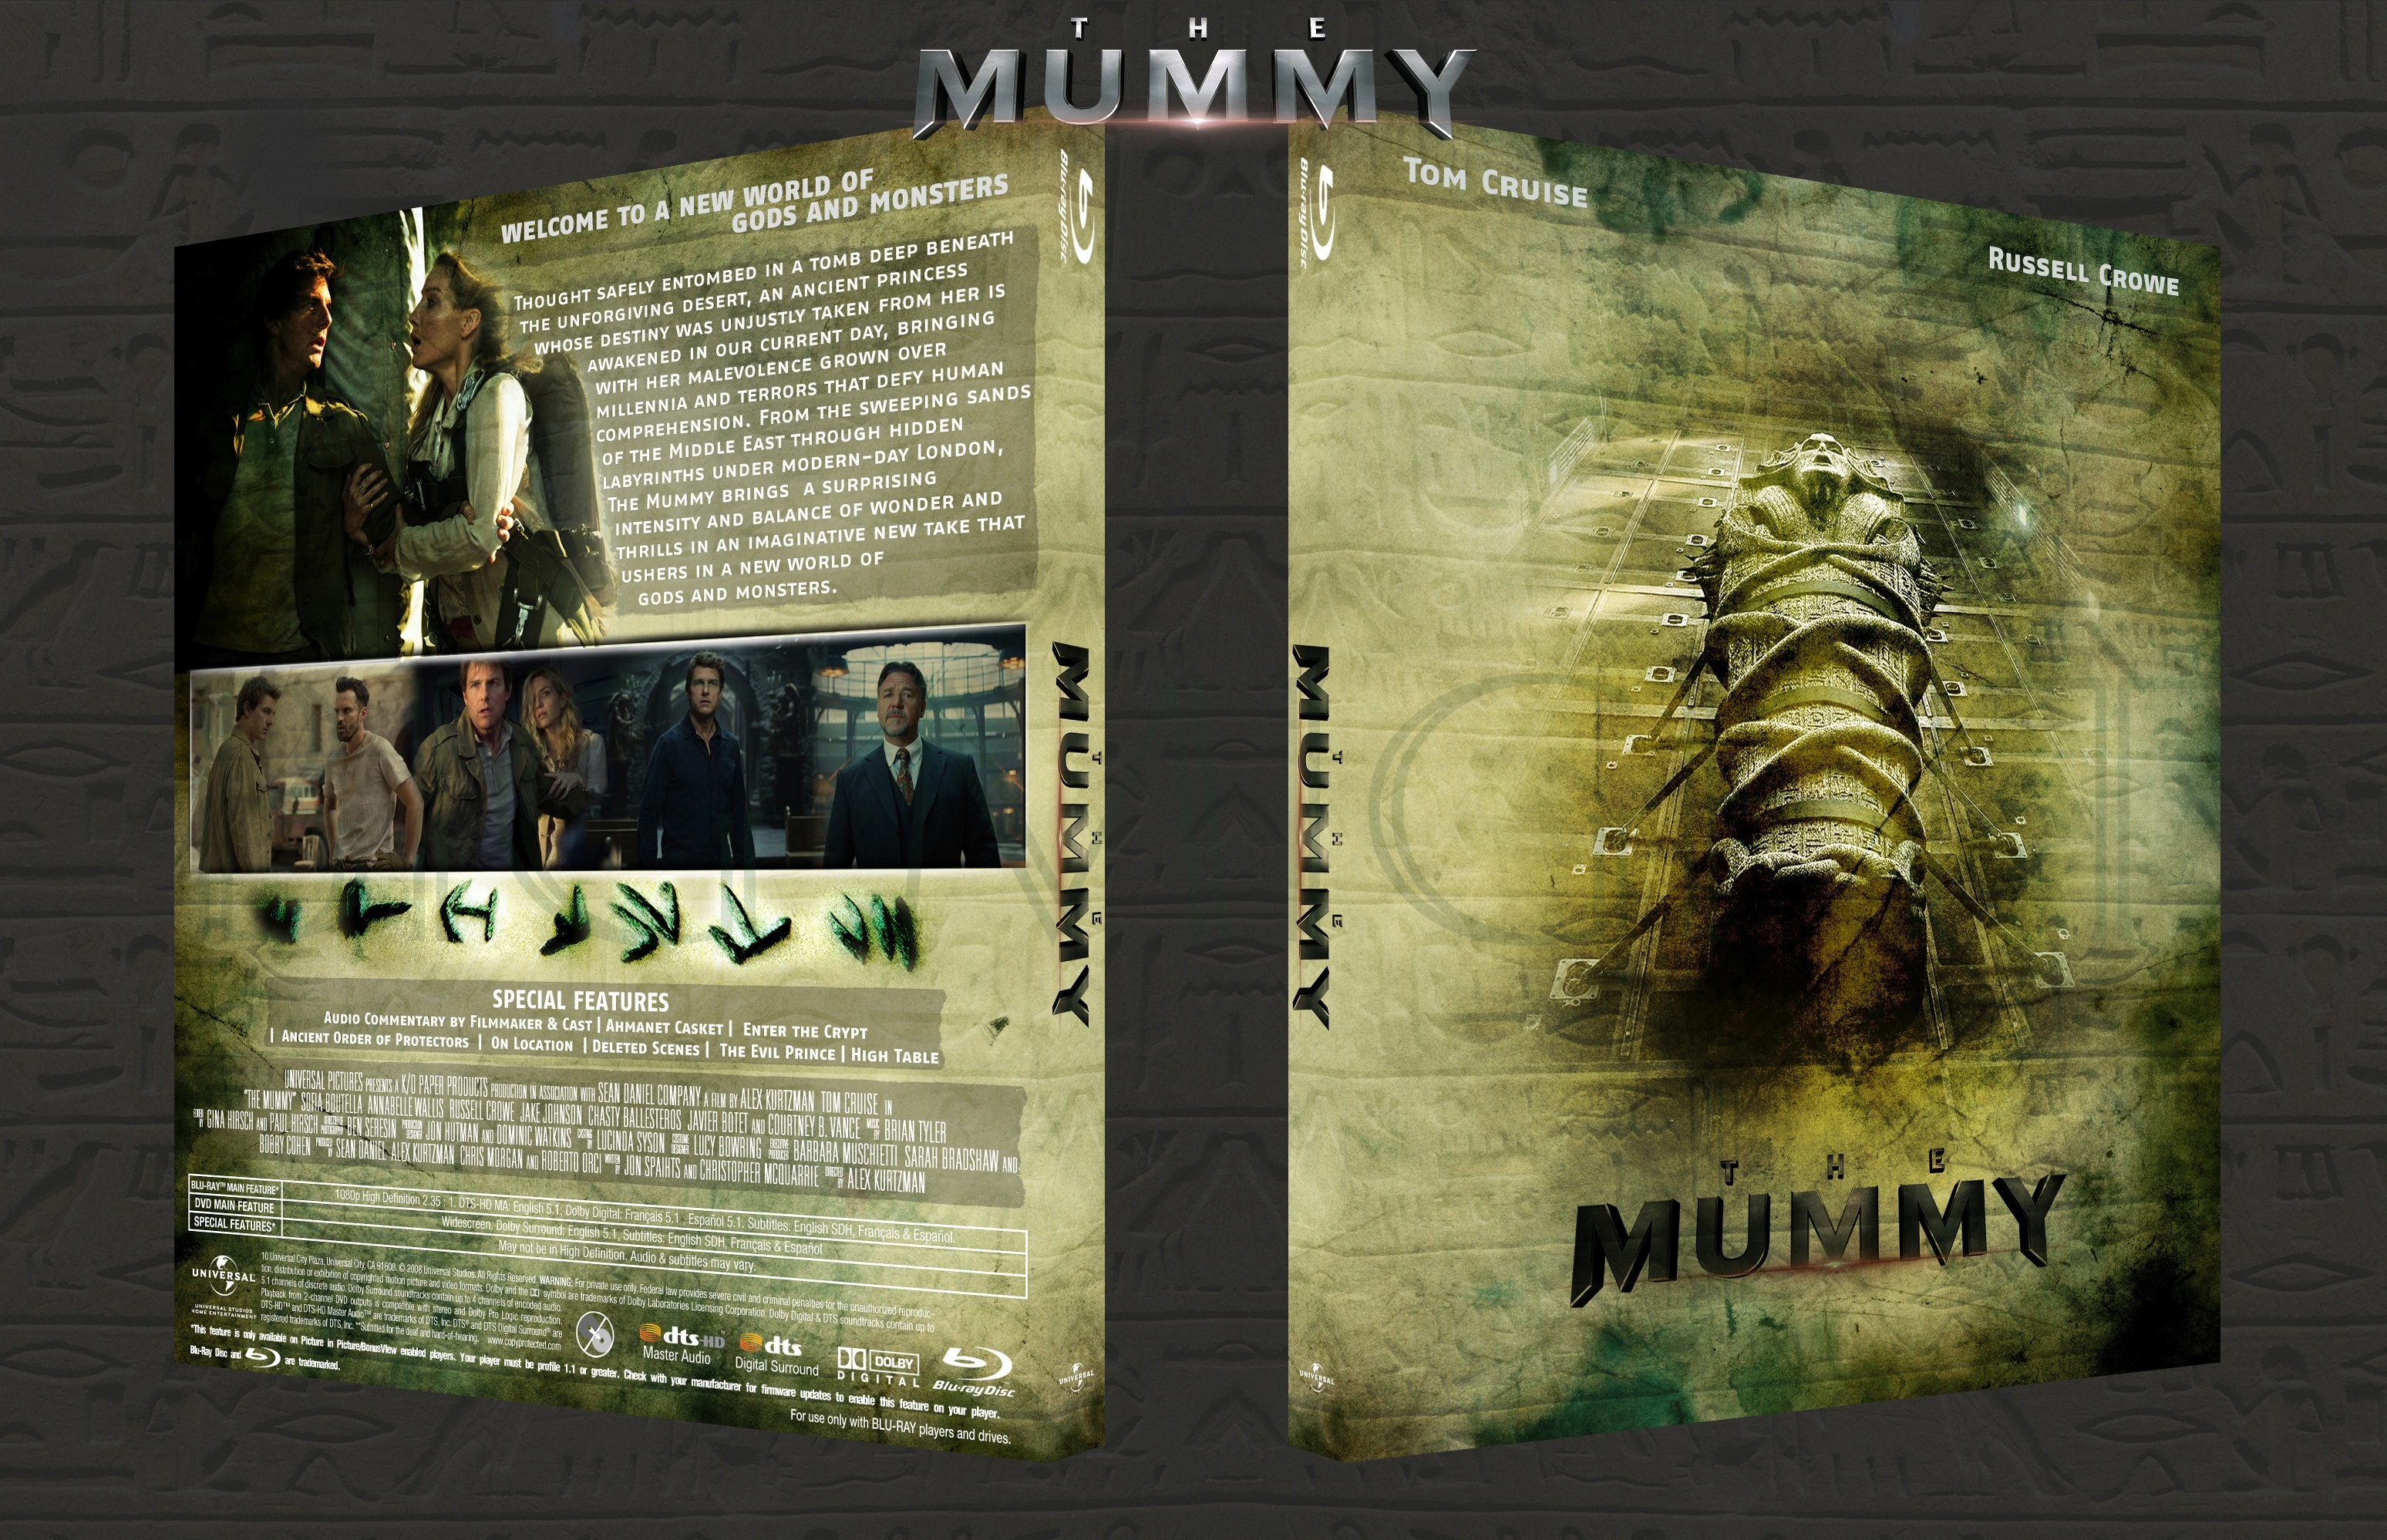 The Mummy box cover